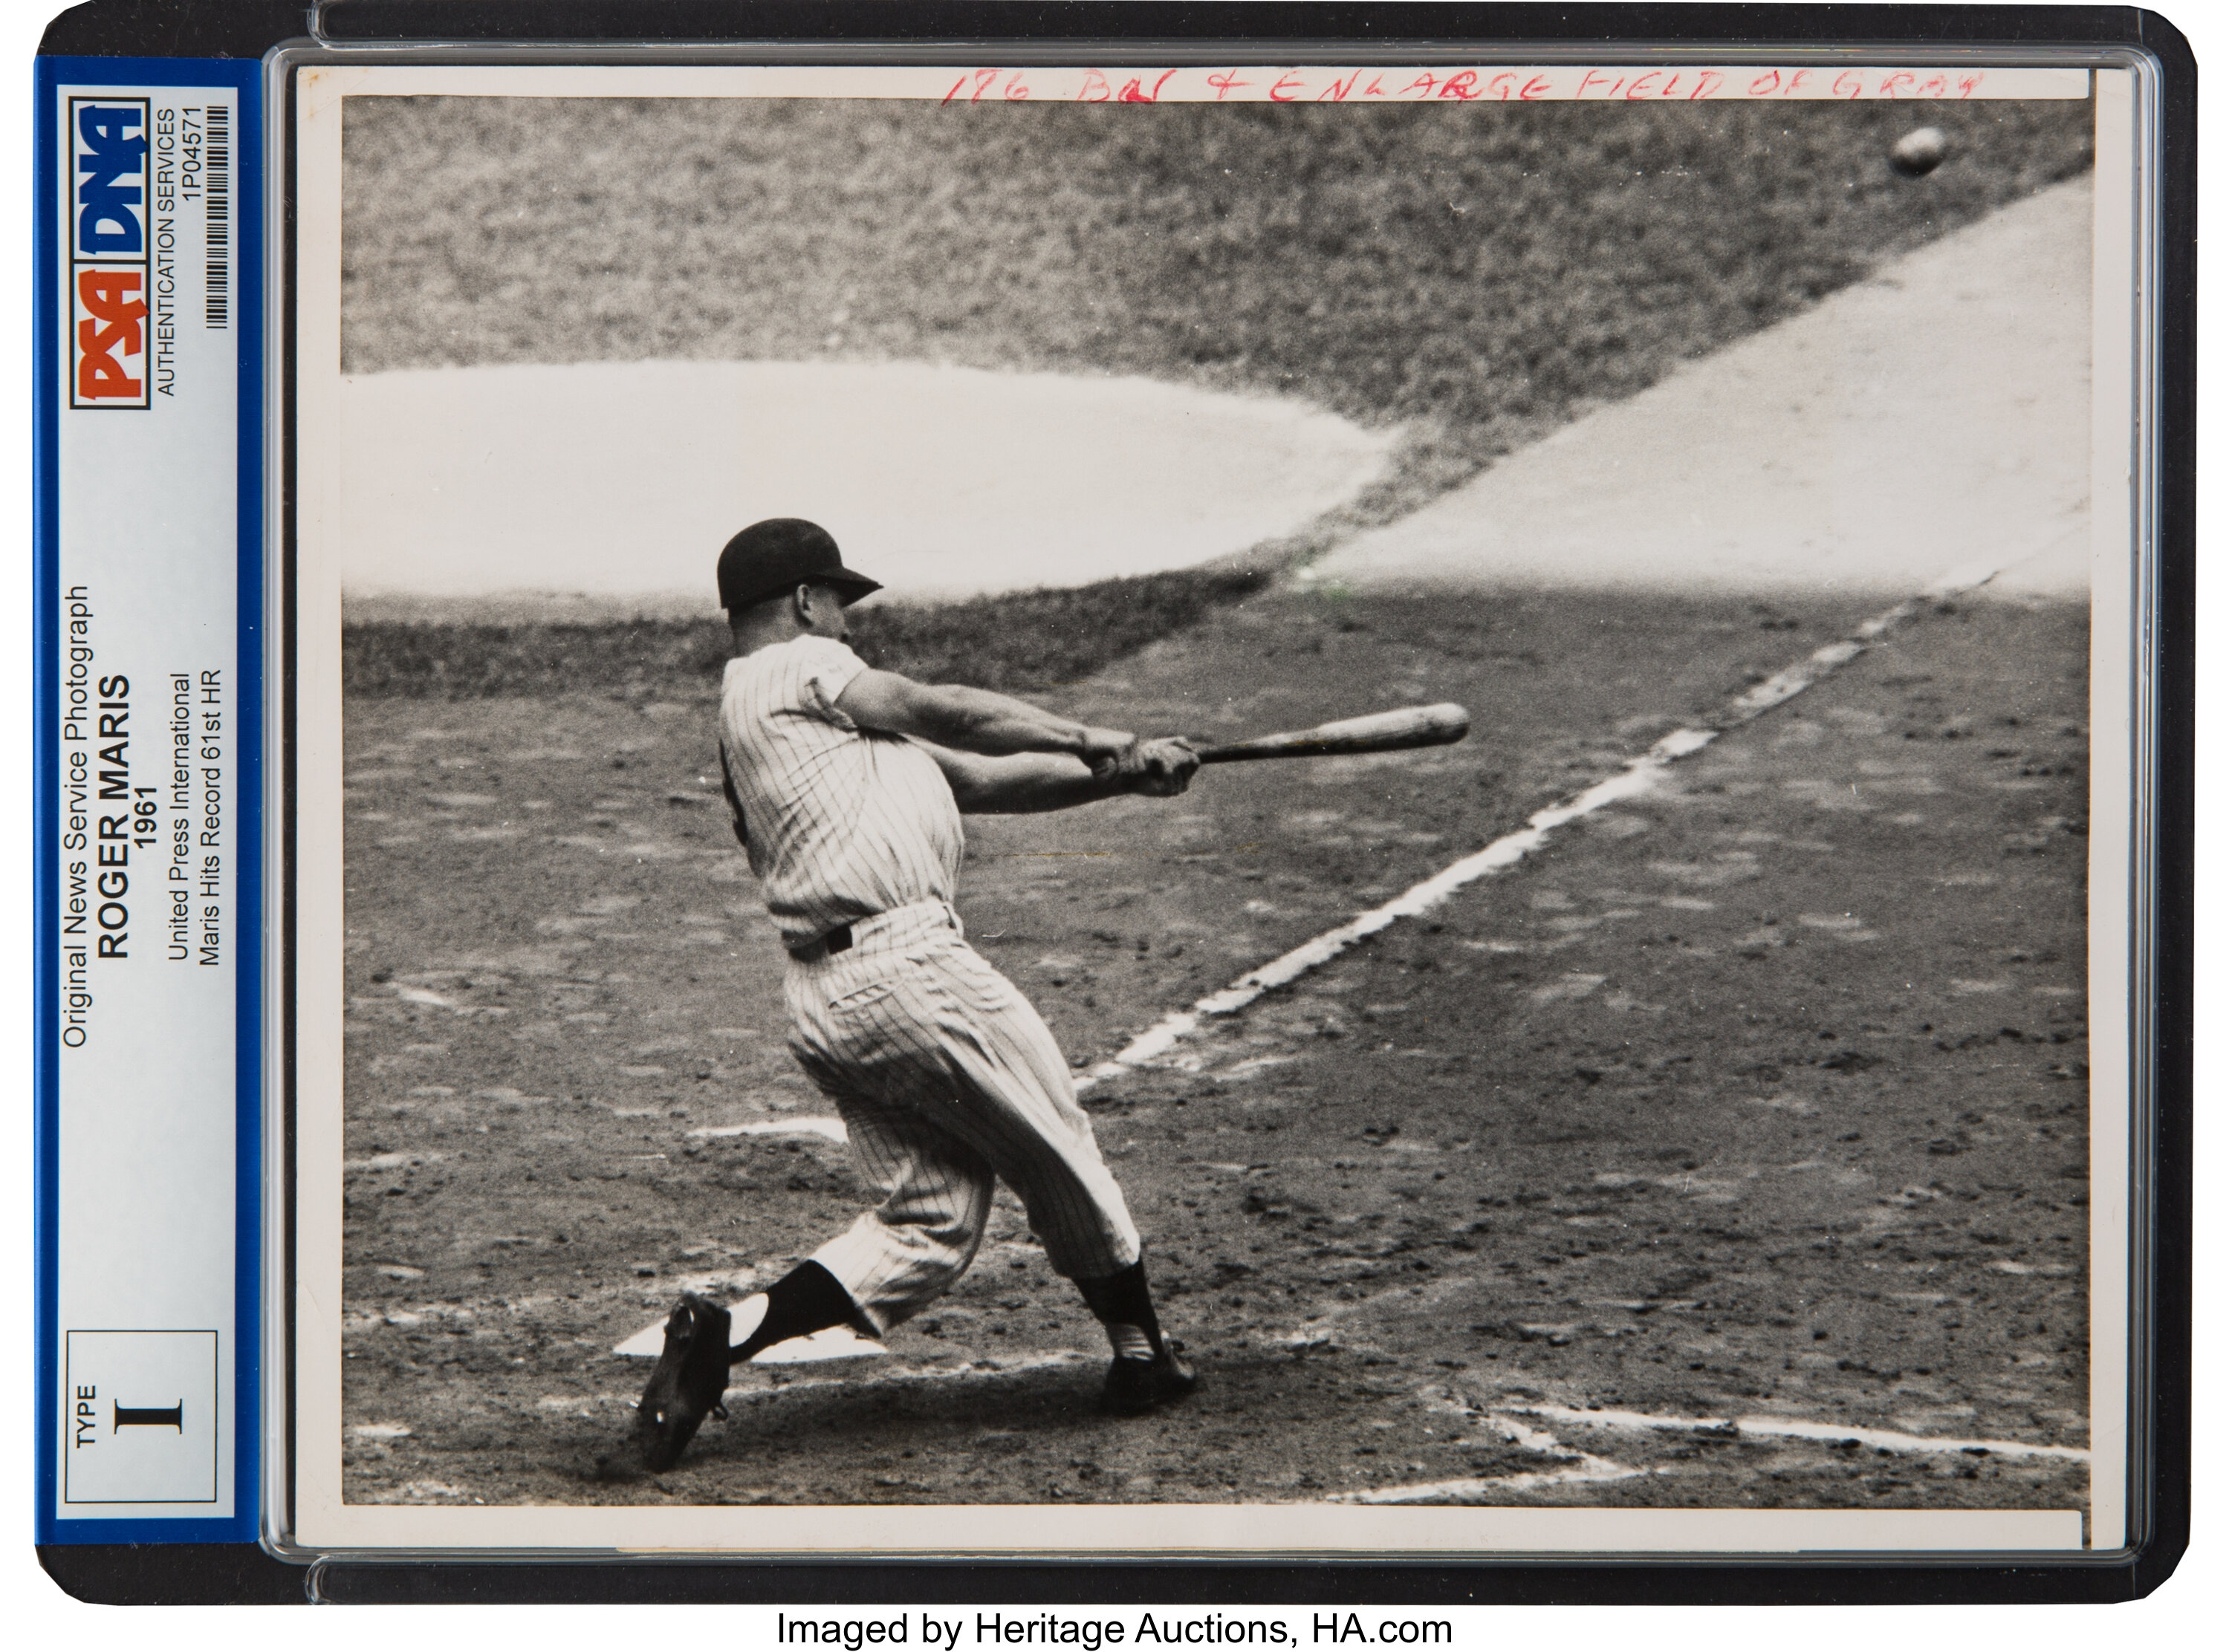 1961 Roger Maris 61st Home Run Original News Photograph, PSA/DNA, Lot  #50138